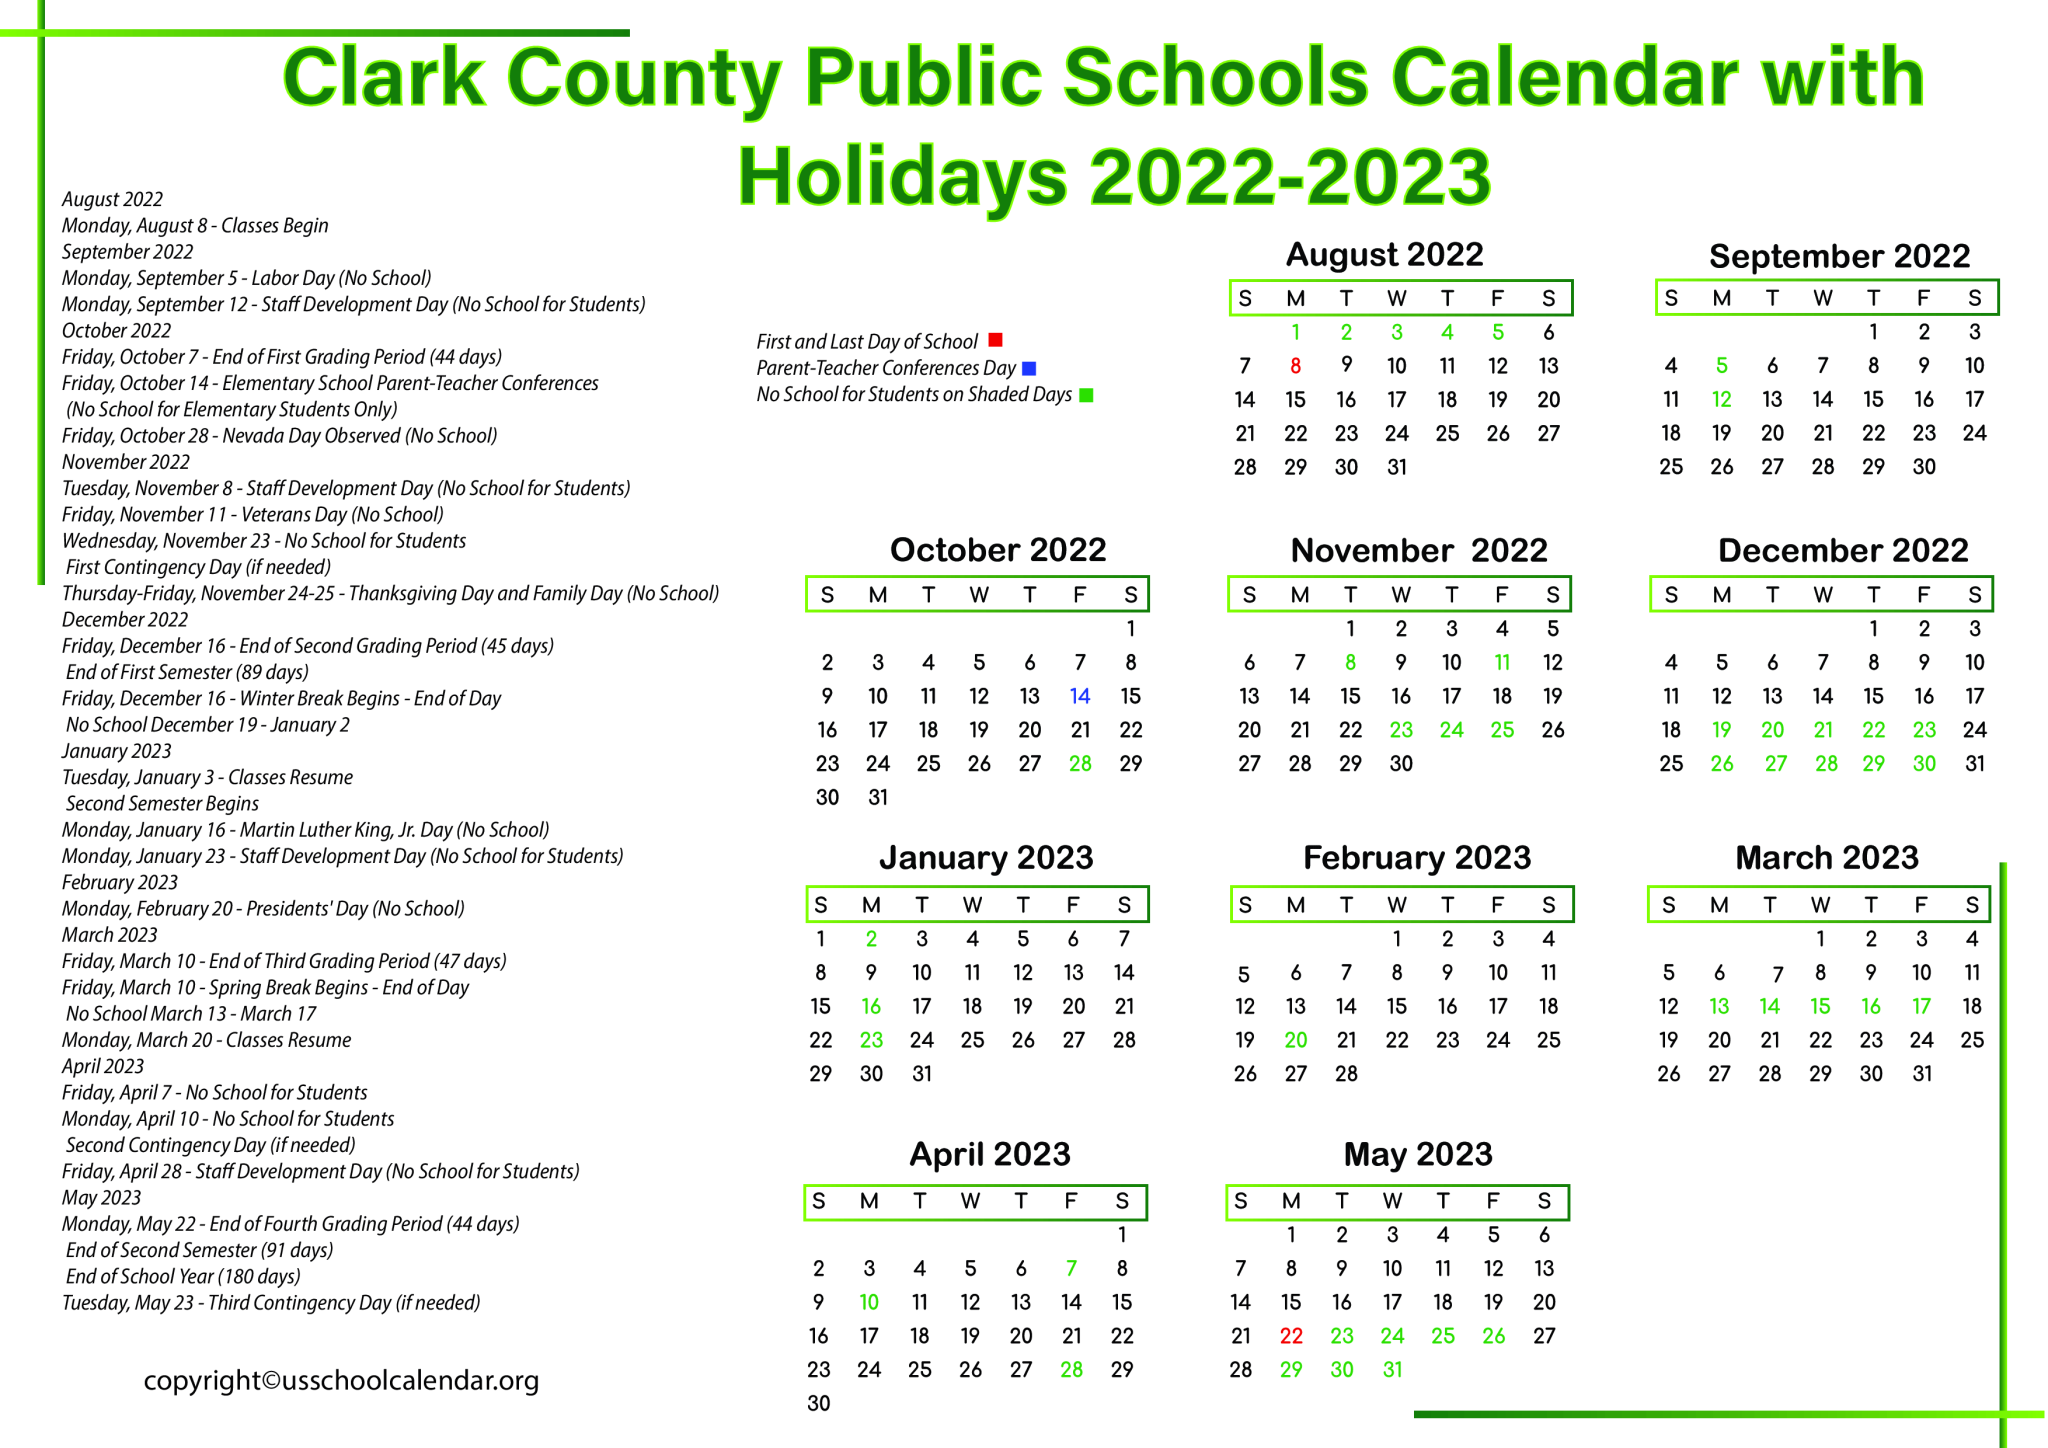 [CCPS] Clark County Public Schools Calendar for 2023